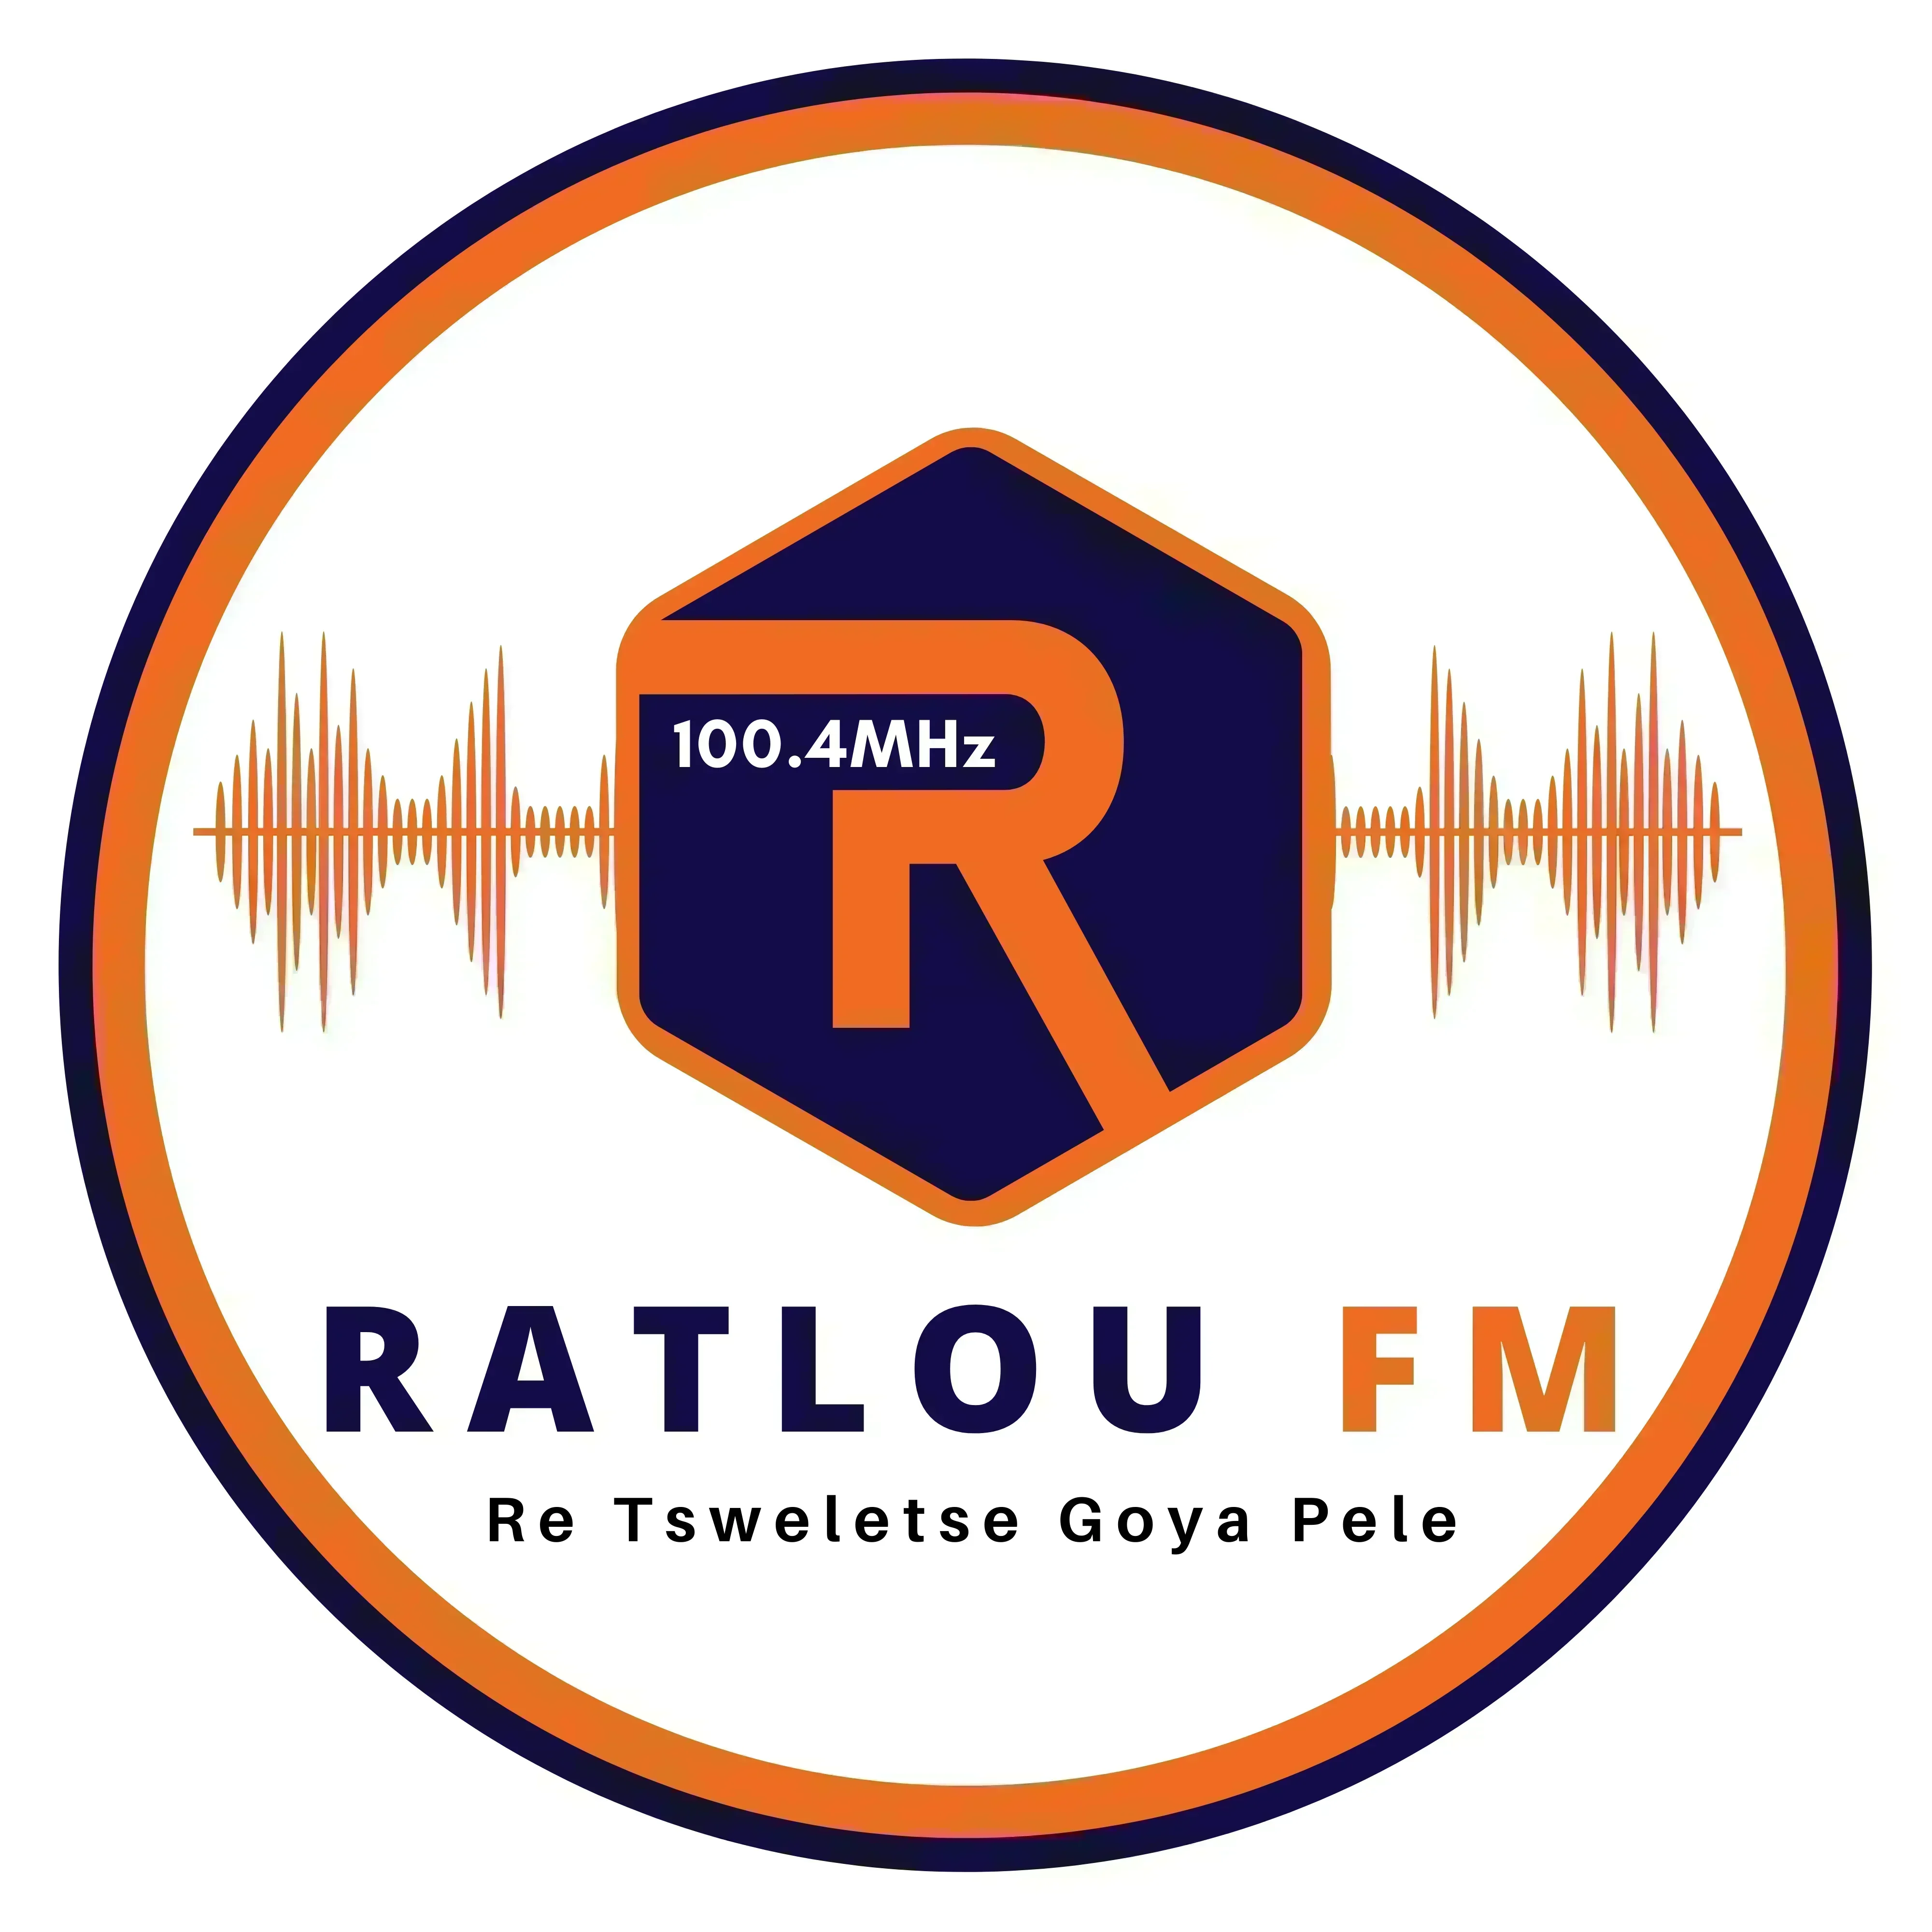 Ratlou FM